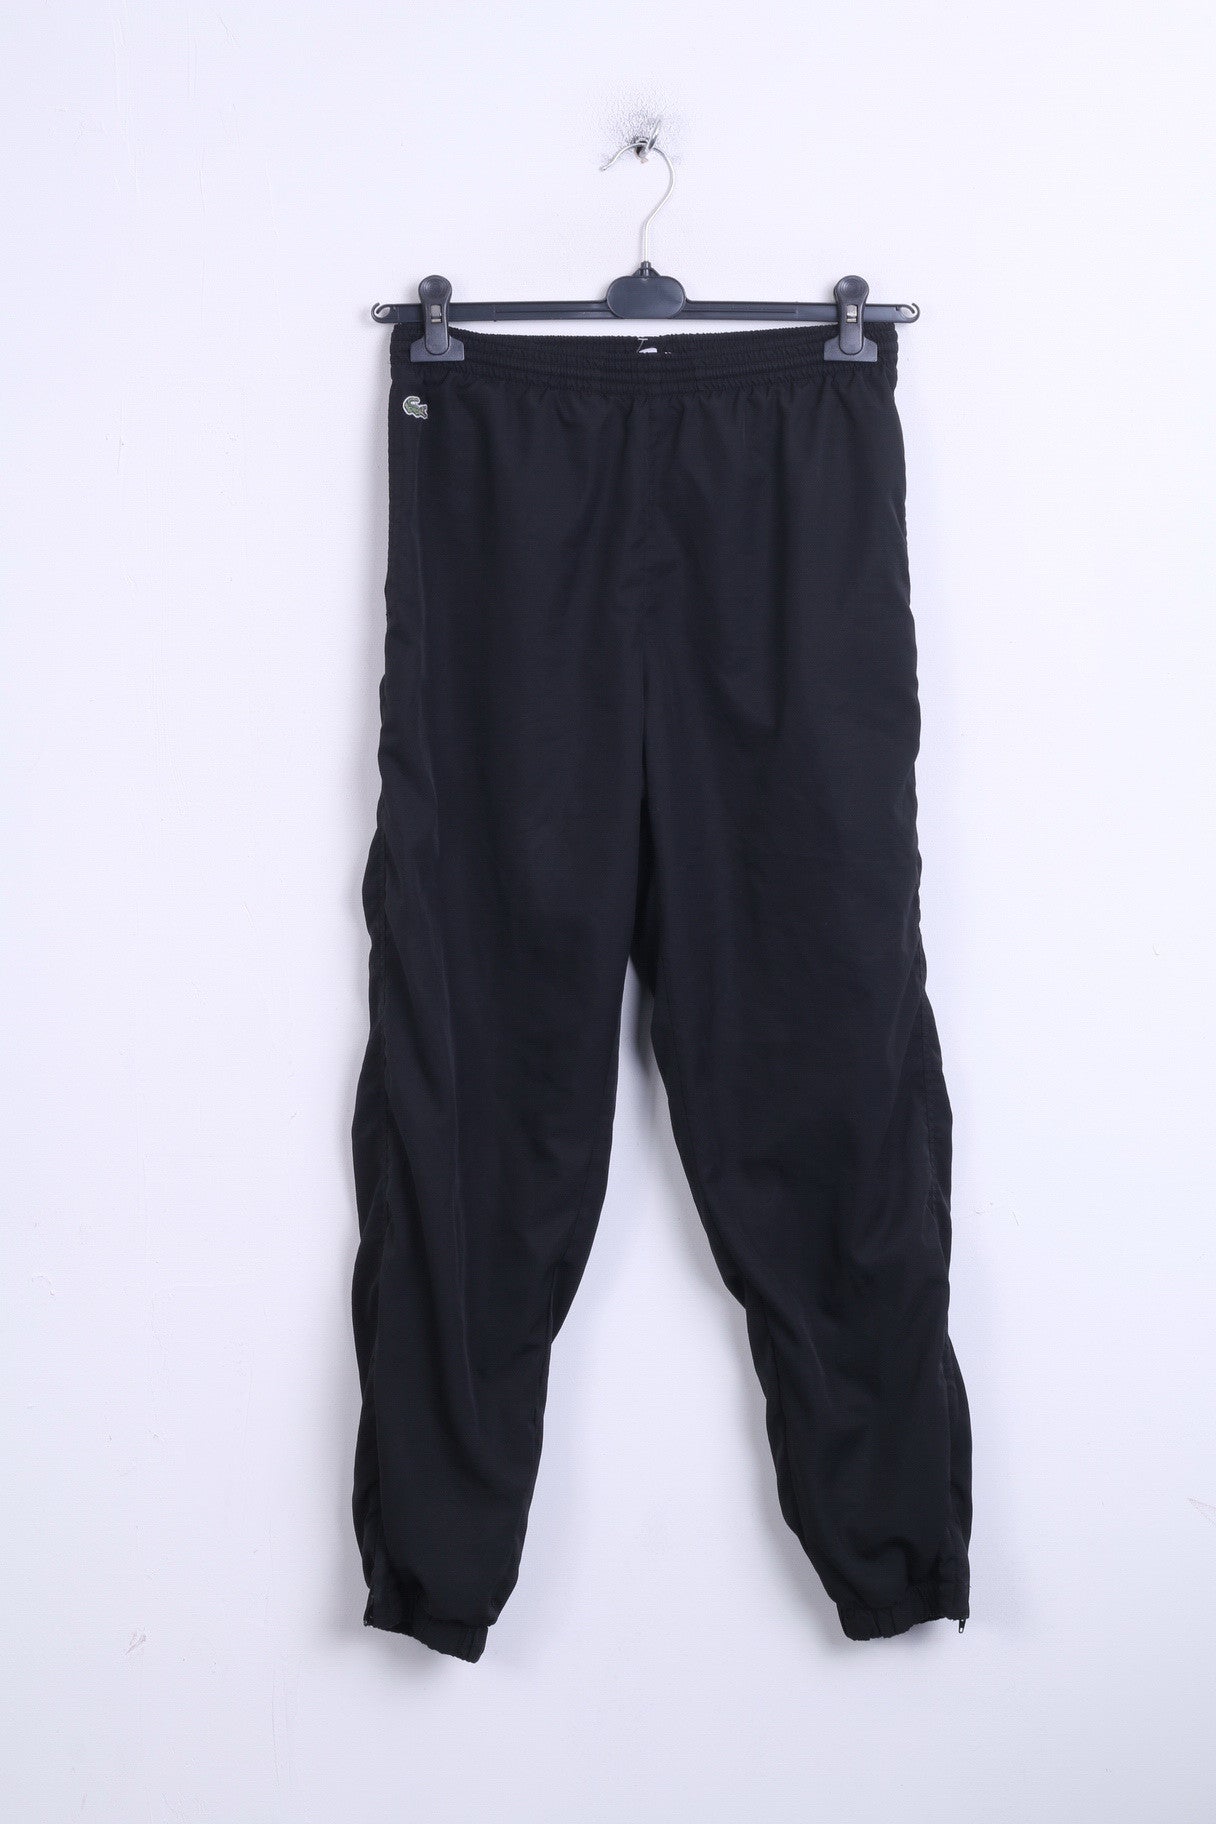 Hummel (Youth 16/176) Mens XS Trousers Black Track Bottom - RetrospectClothes